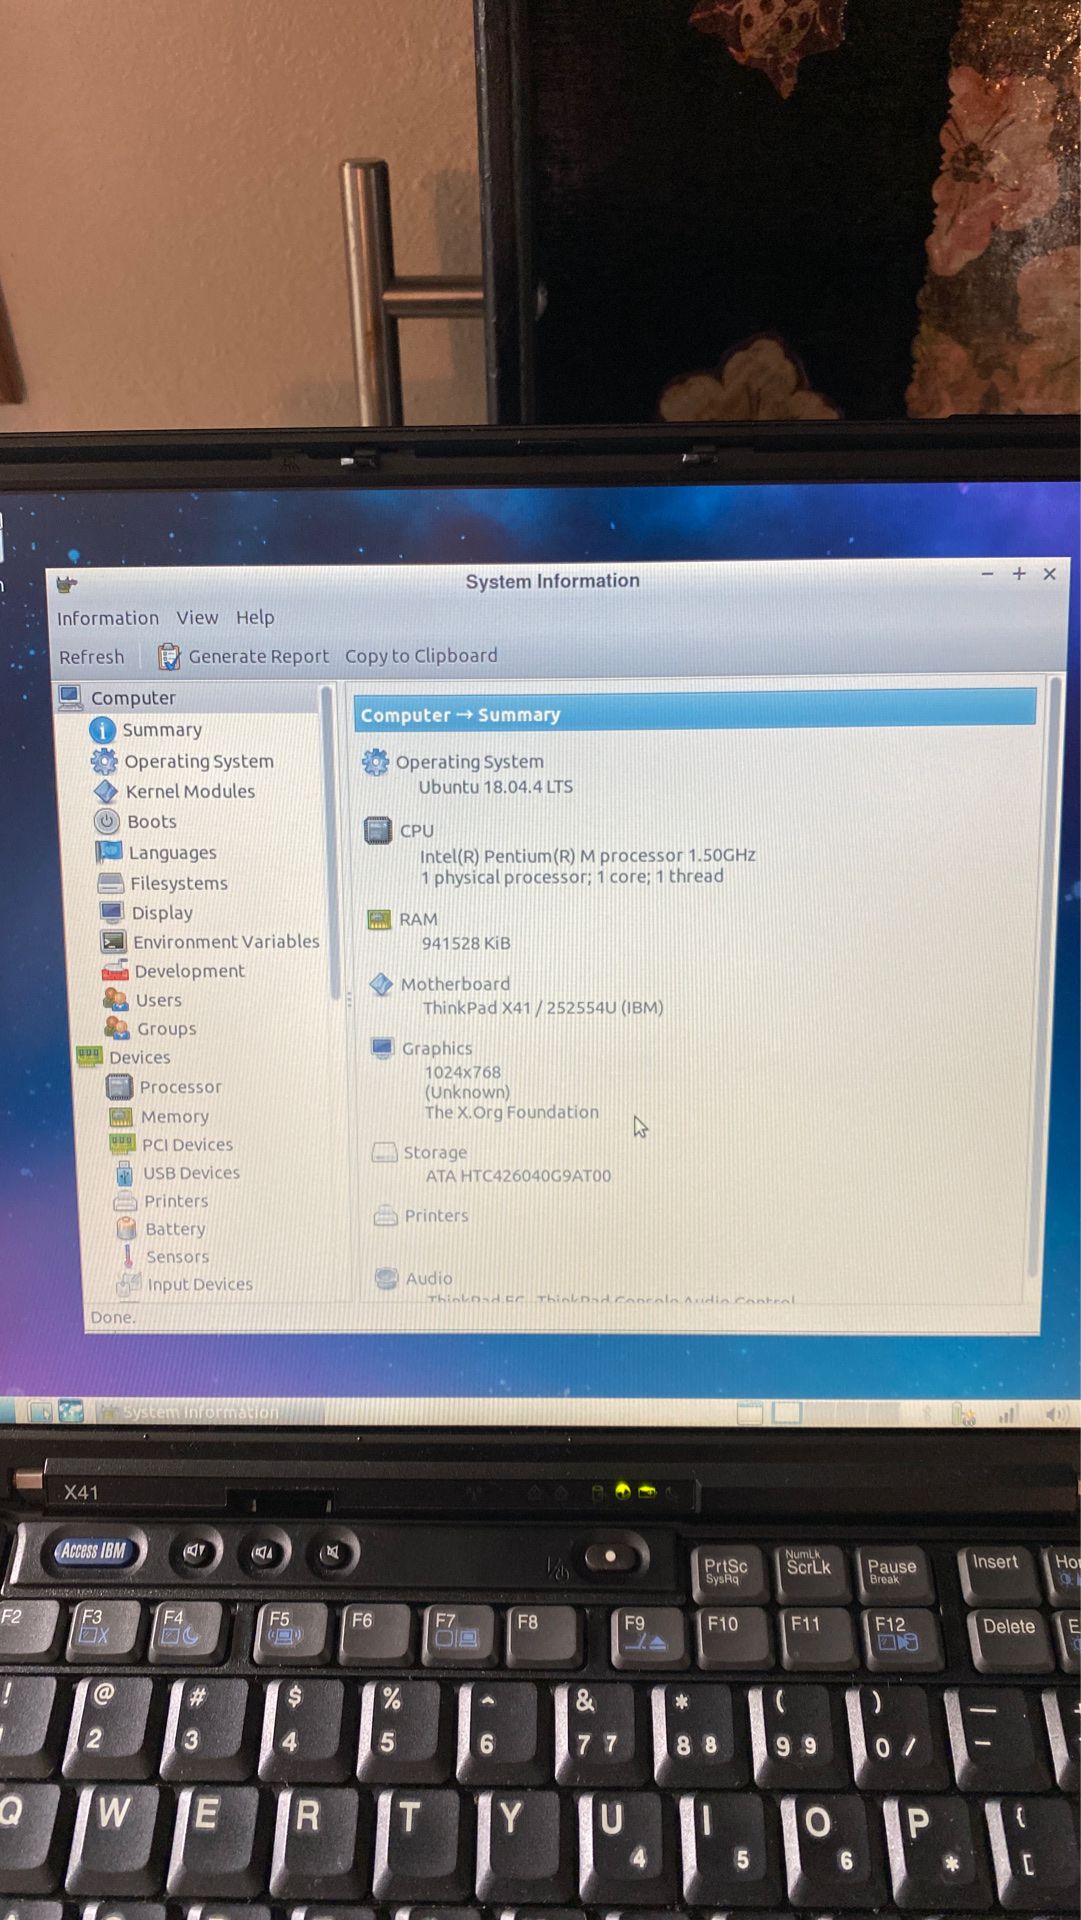 IBM X41 Notebook - Linux OS